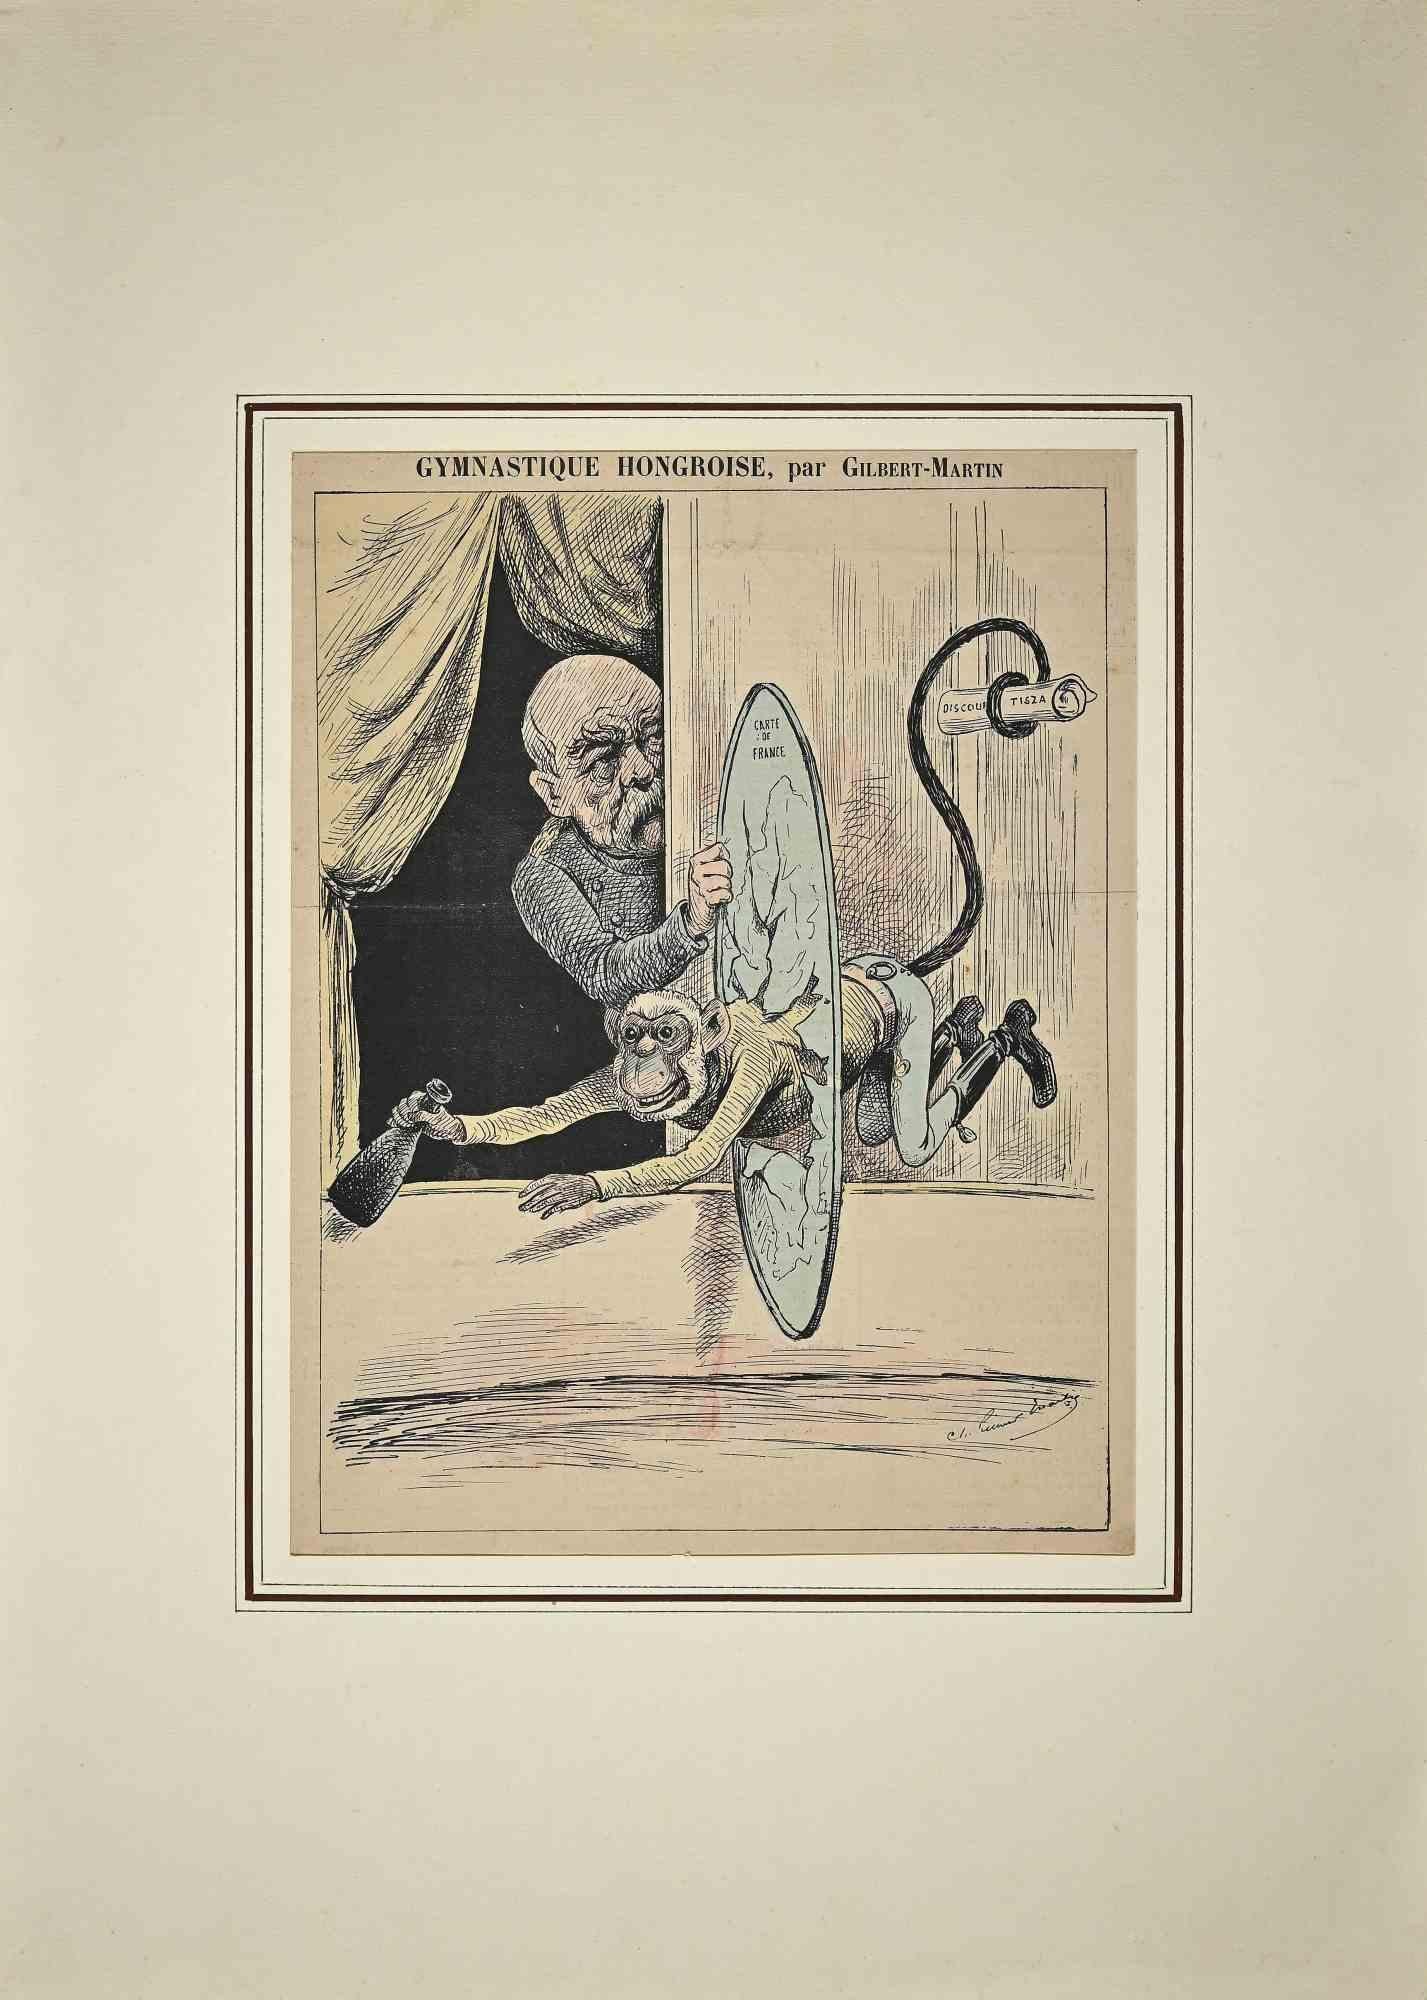 Charles Gilbert-Martin Figurative Print - Gymnastique Hongroise, par Gilbert-Martin - Lithograph - 1888